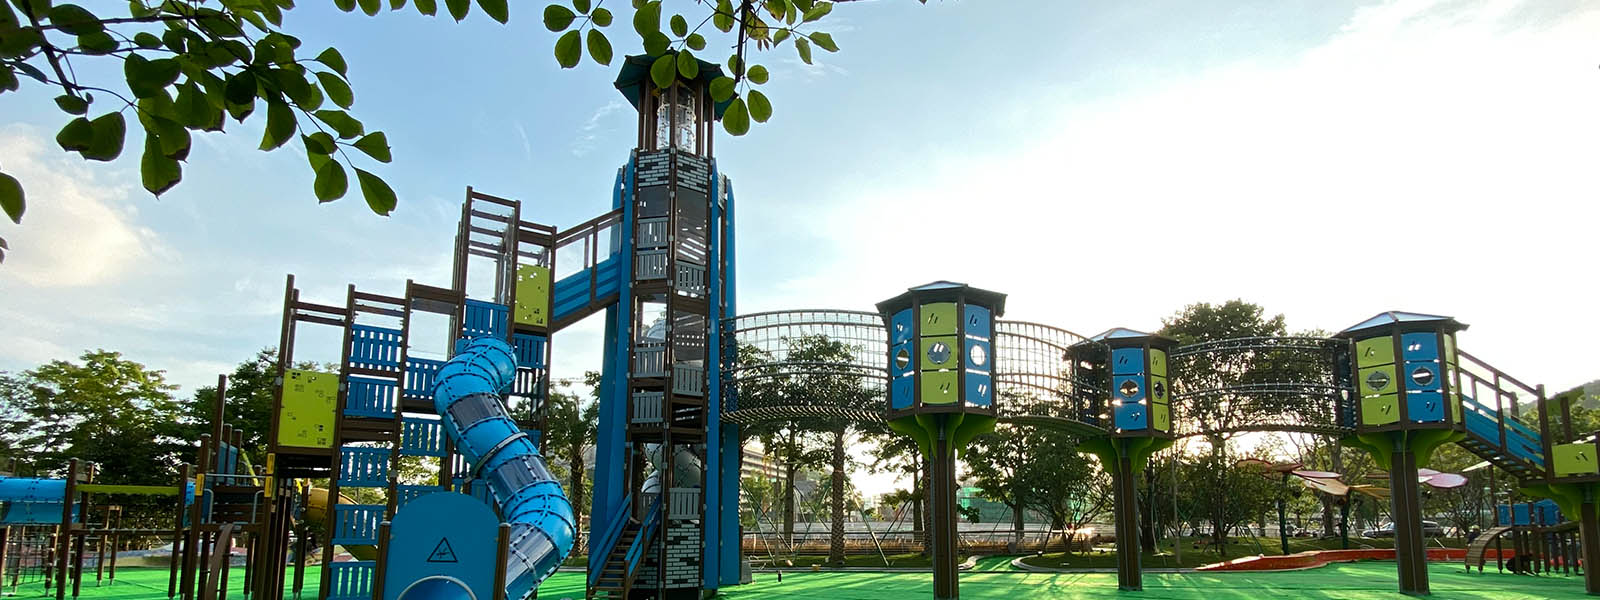 Kaisa Golden Bay Playground, Shenzhen, China